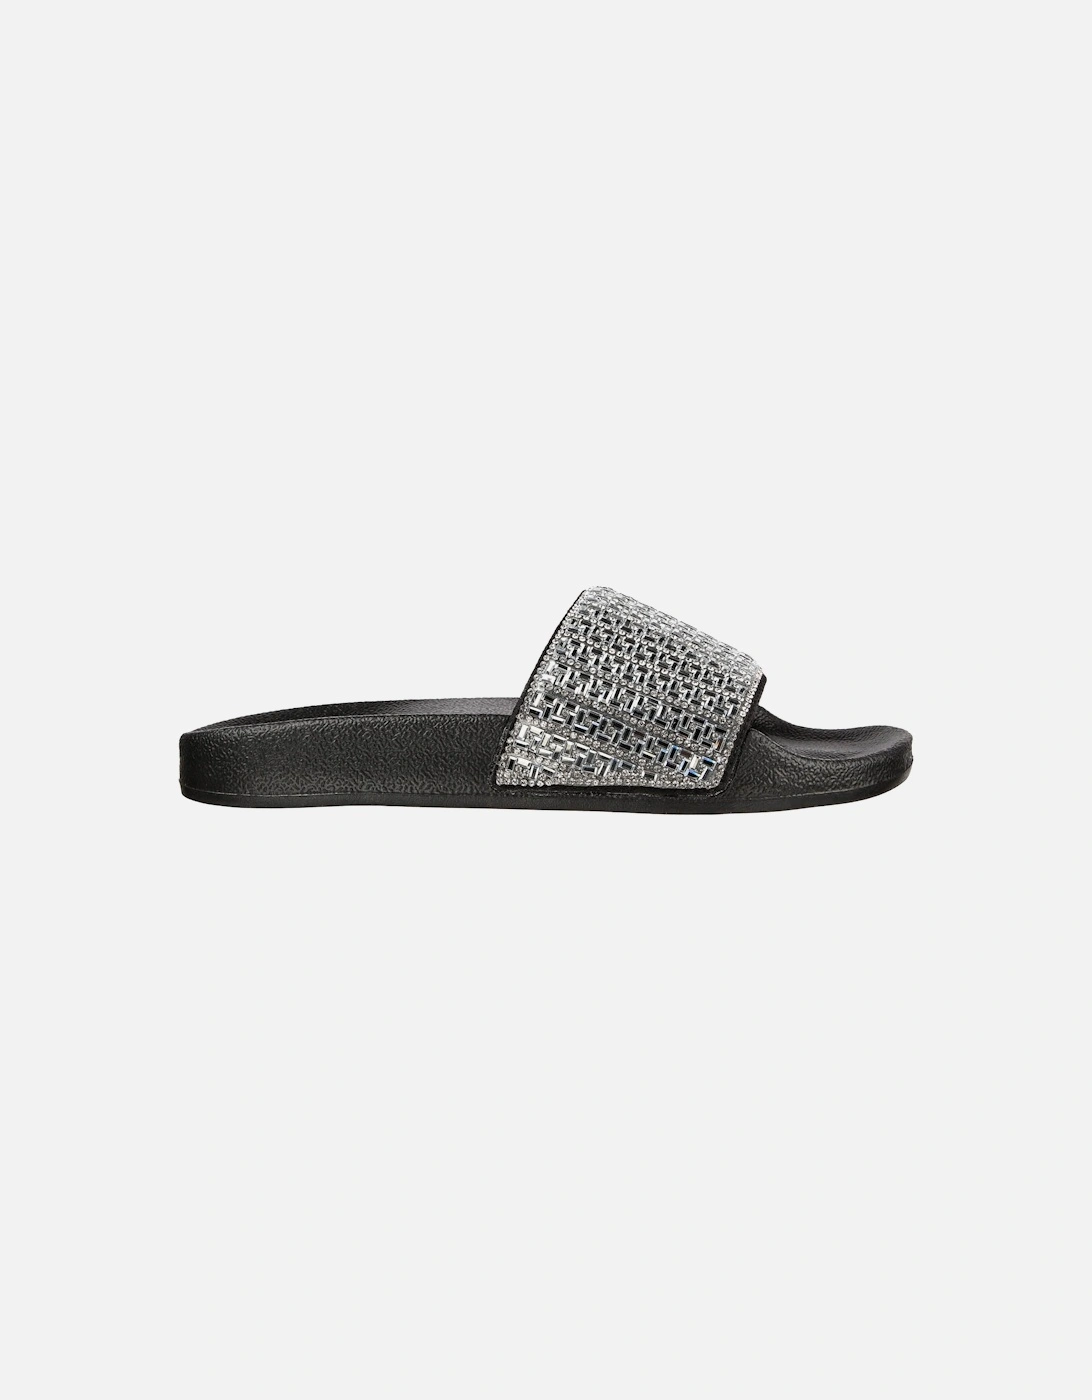 Womens Pop Ups New Spark Sandals (Black/Silver)